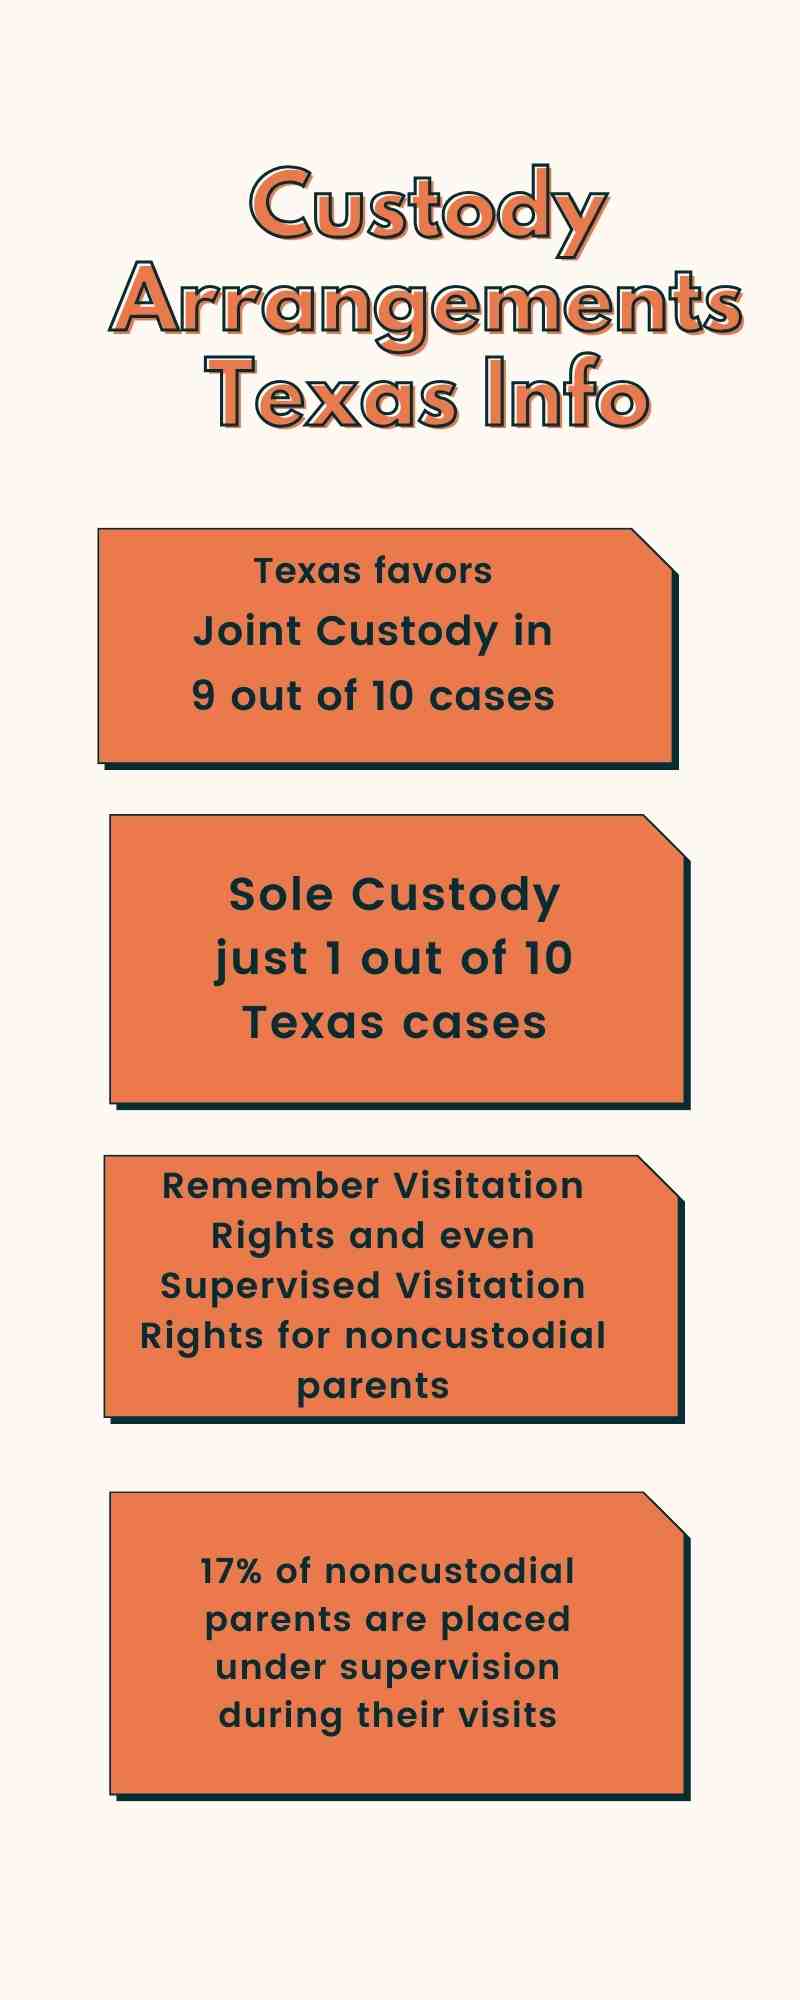 Custodial arrangements in texas - screenshot.